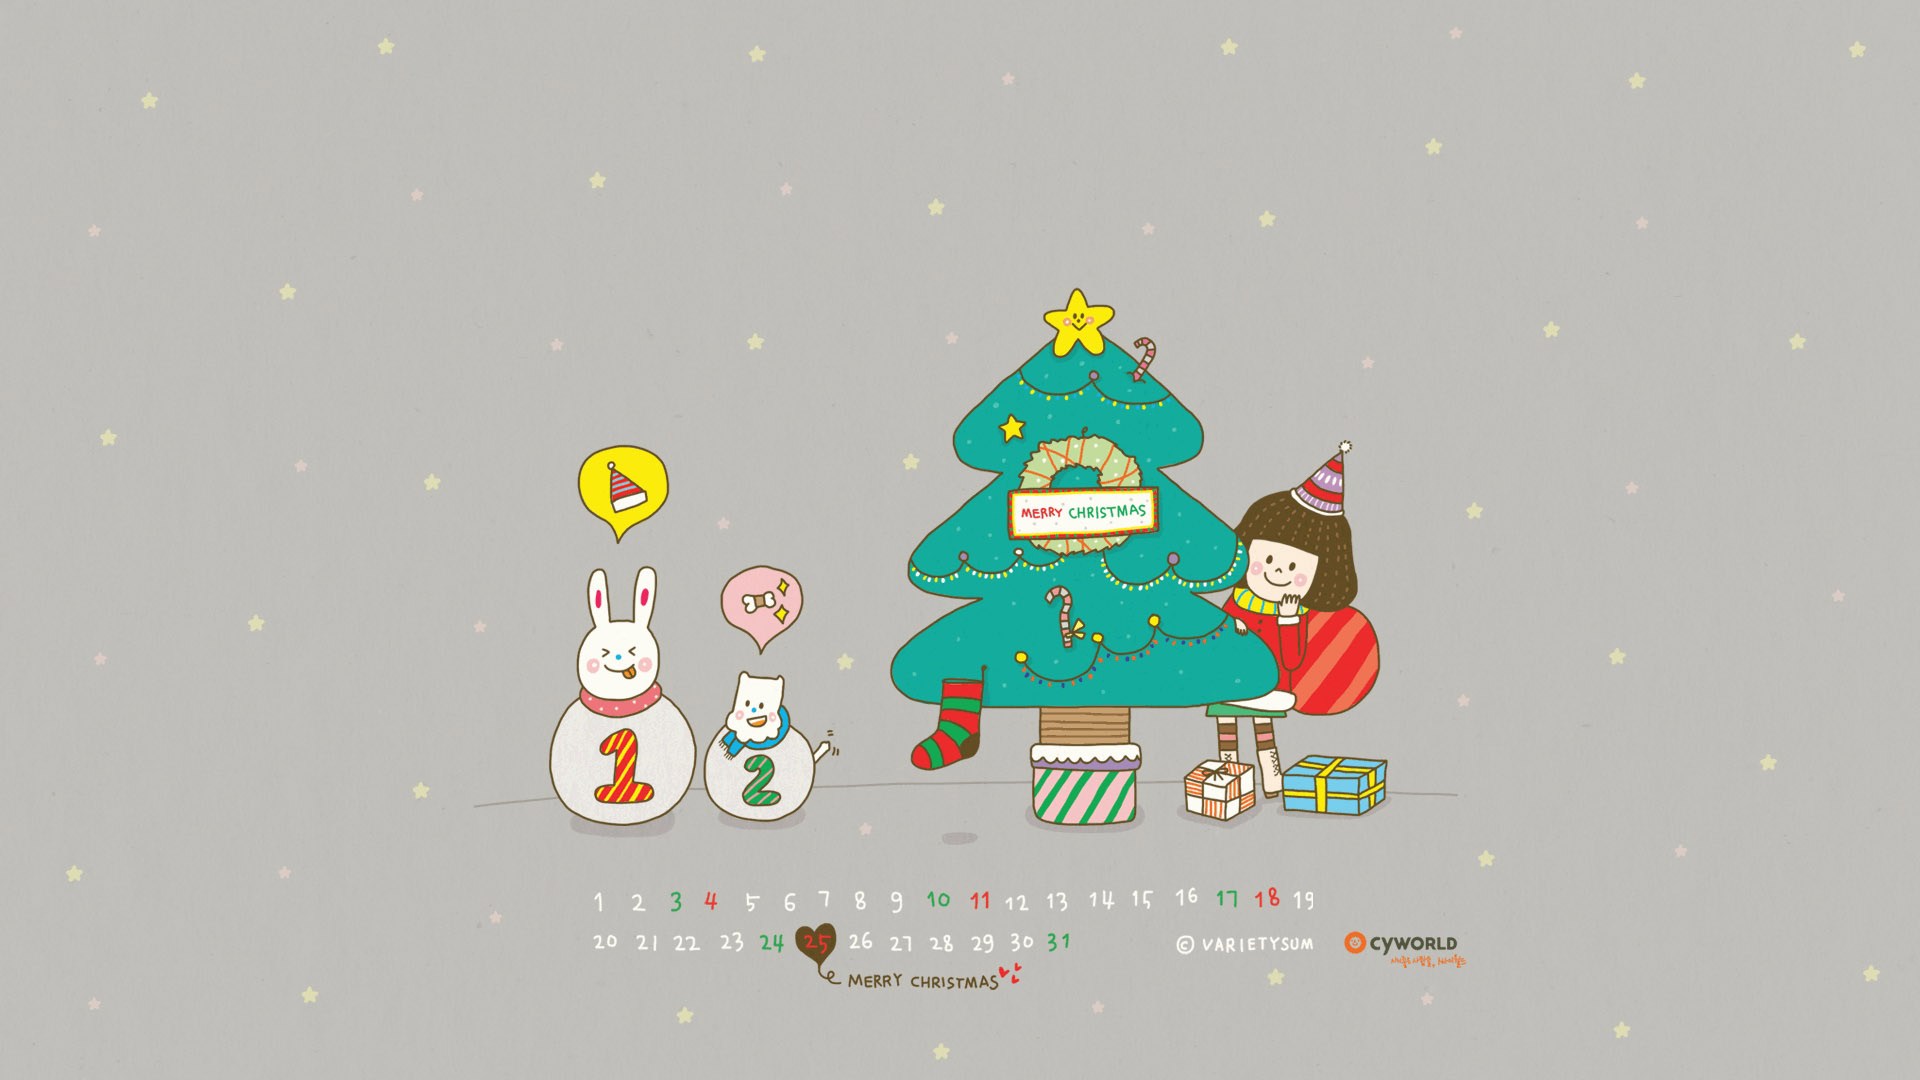 Merry Christmas Cyworld December 2011 Calendar Wallpaper